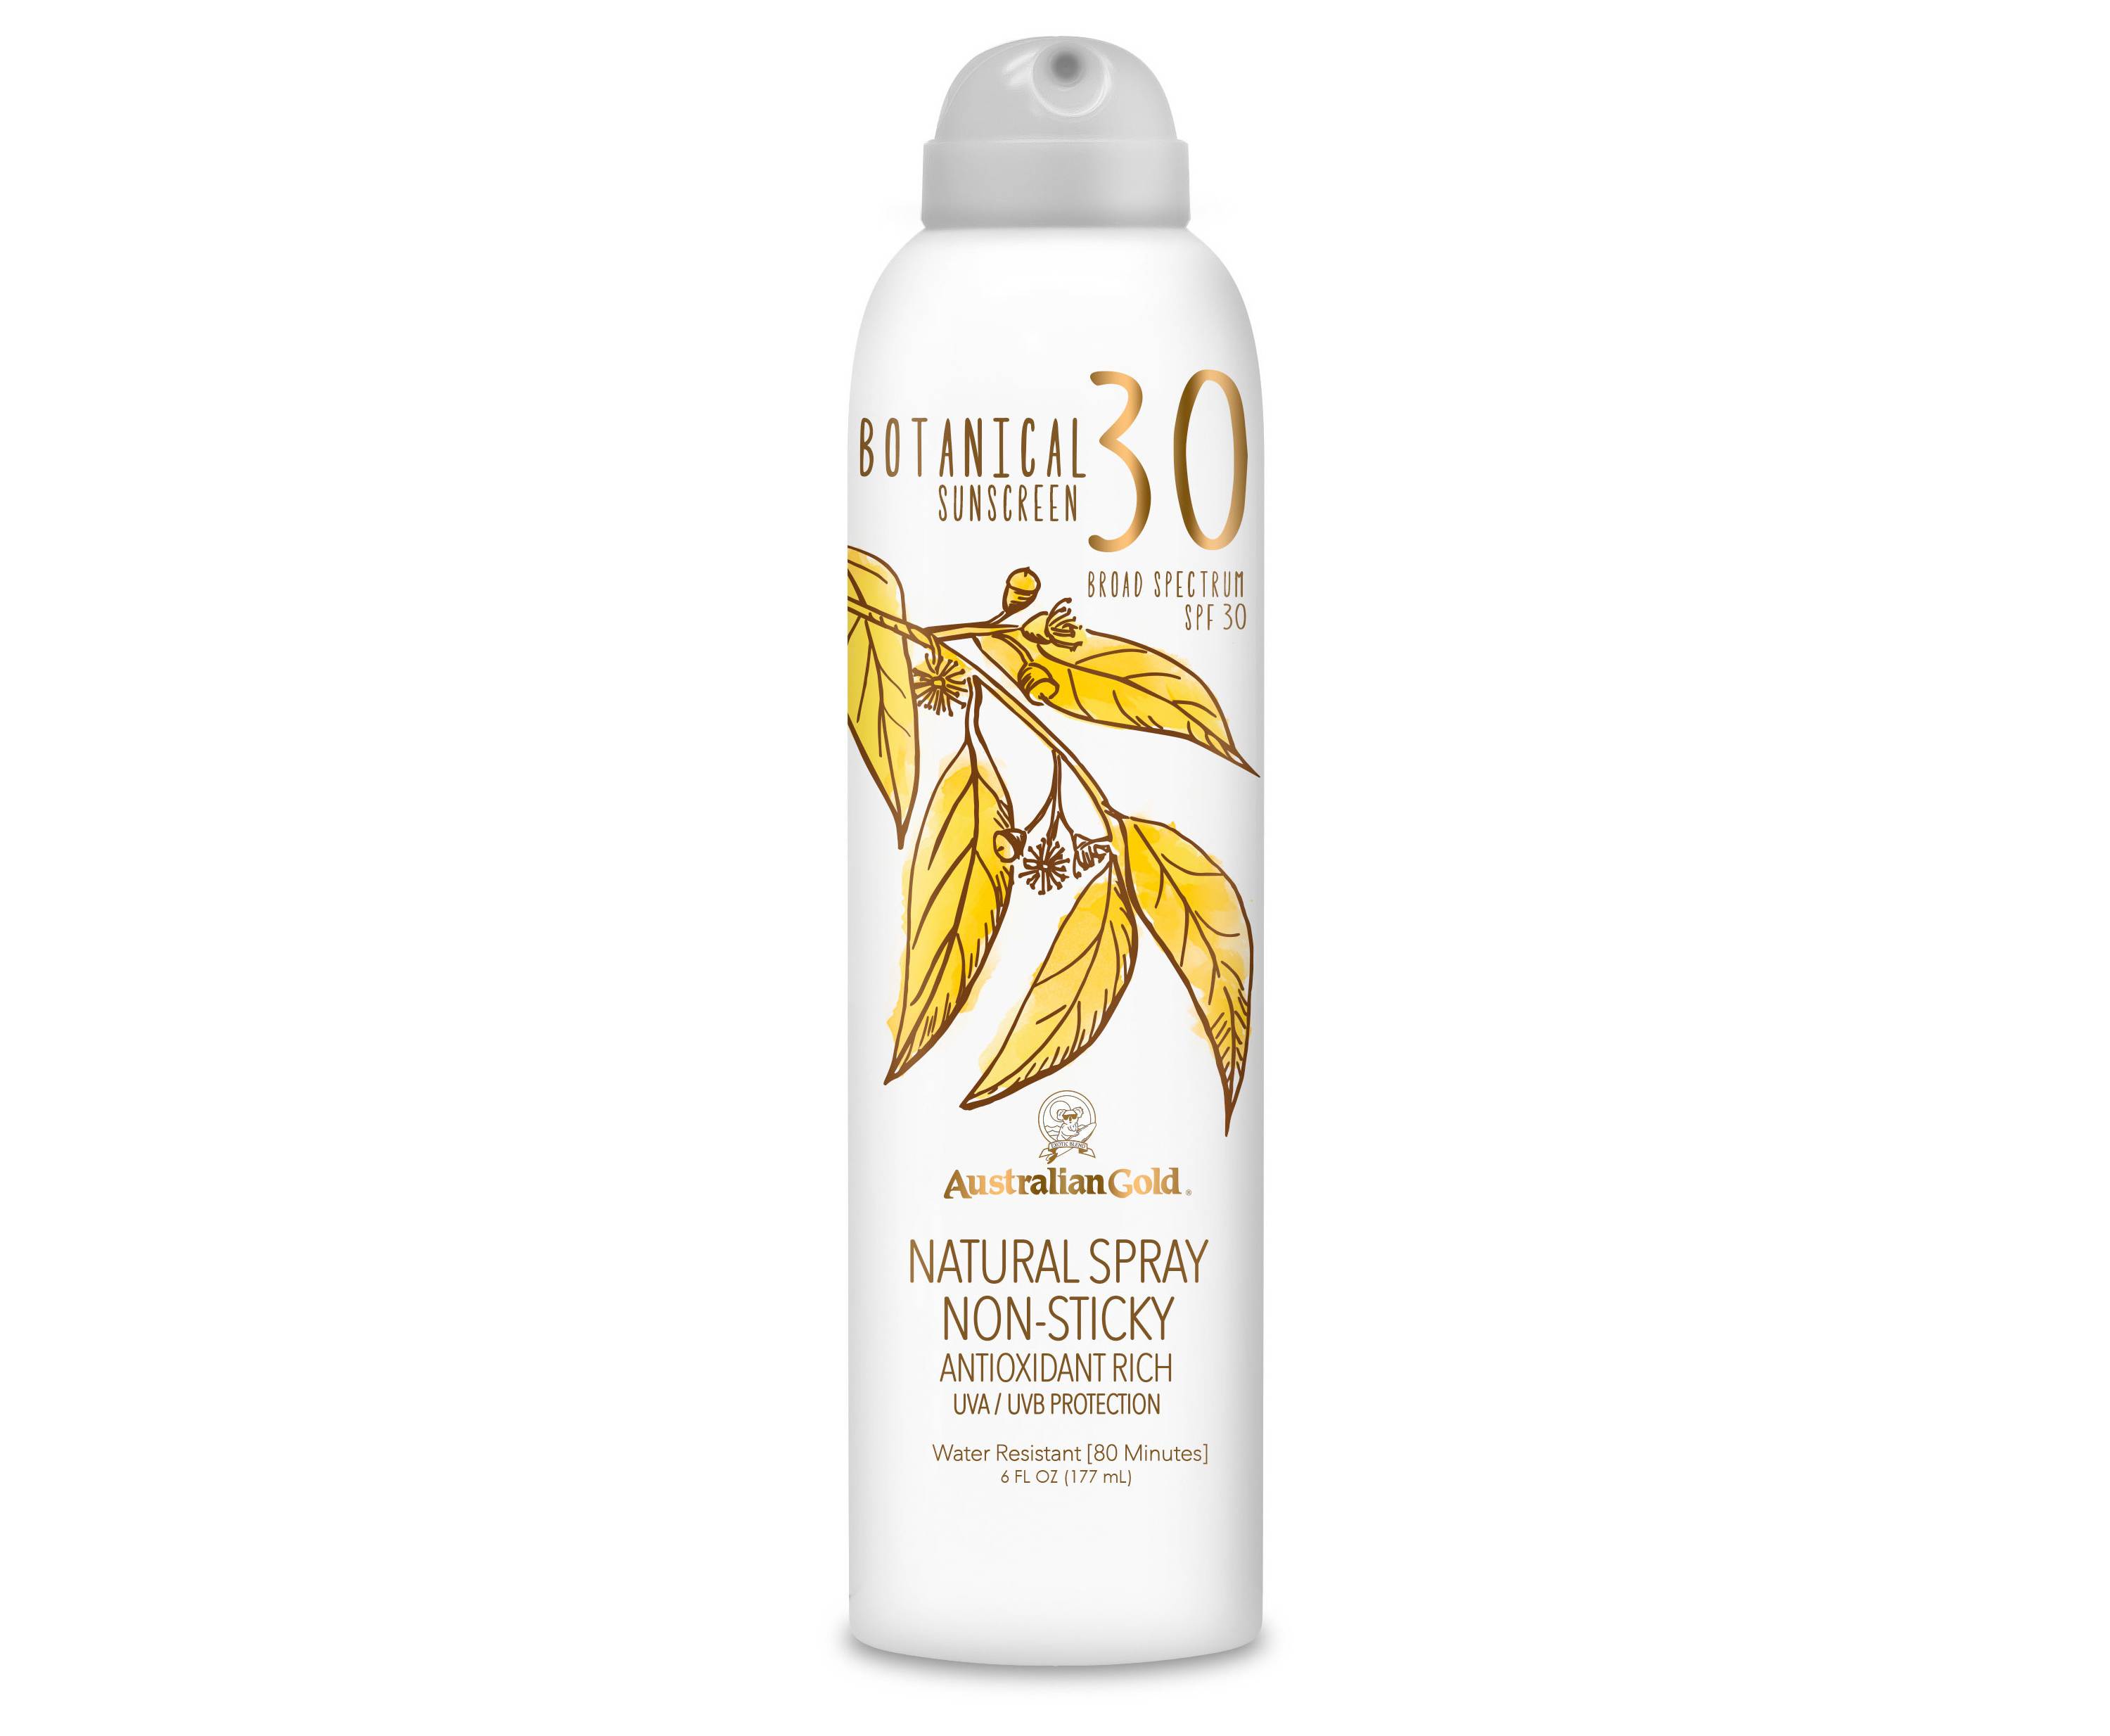 Australian Gold Botanical Sunscreen SPF 30 Natural Continuous Sunscreen Spray - image 1 of 10